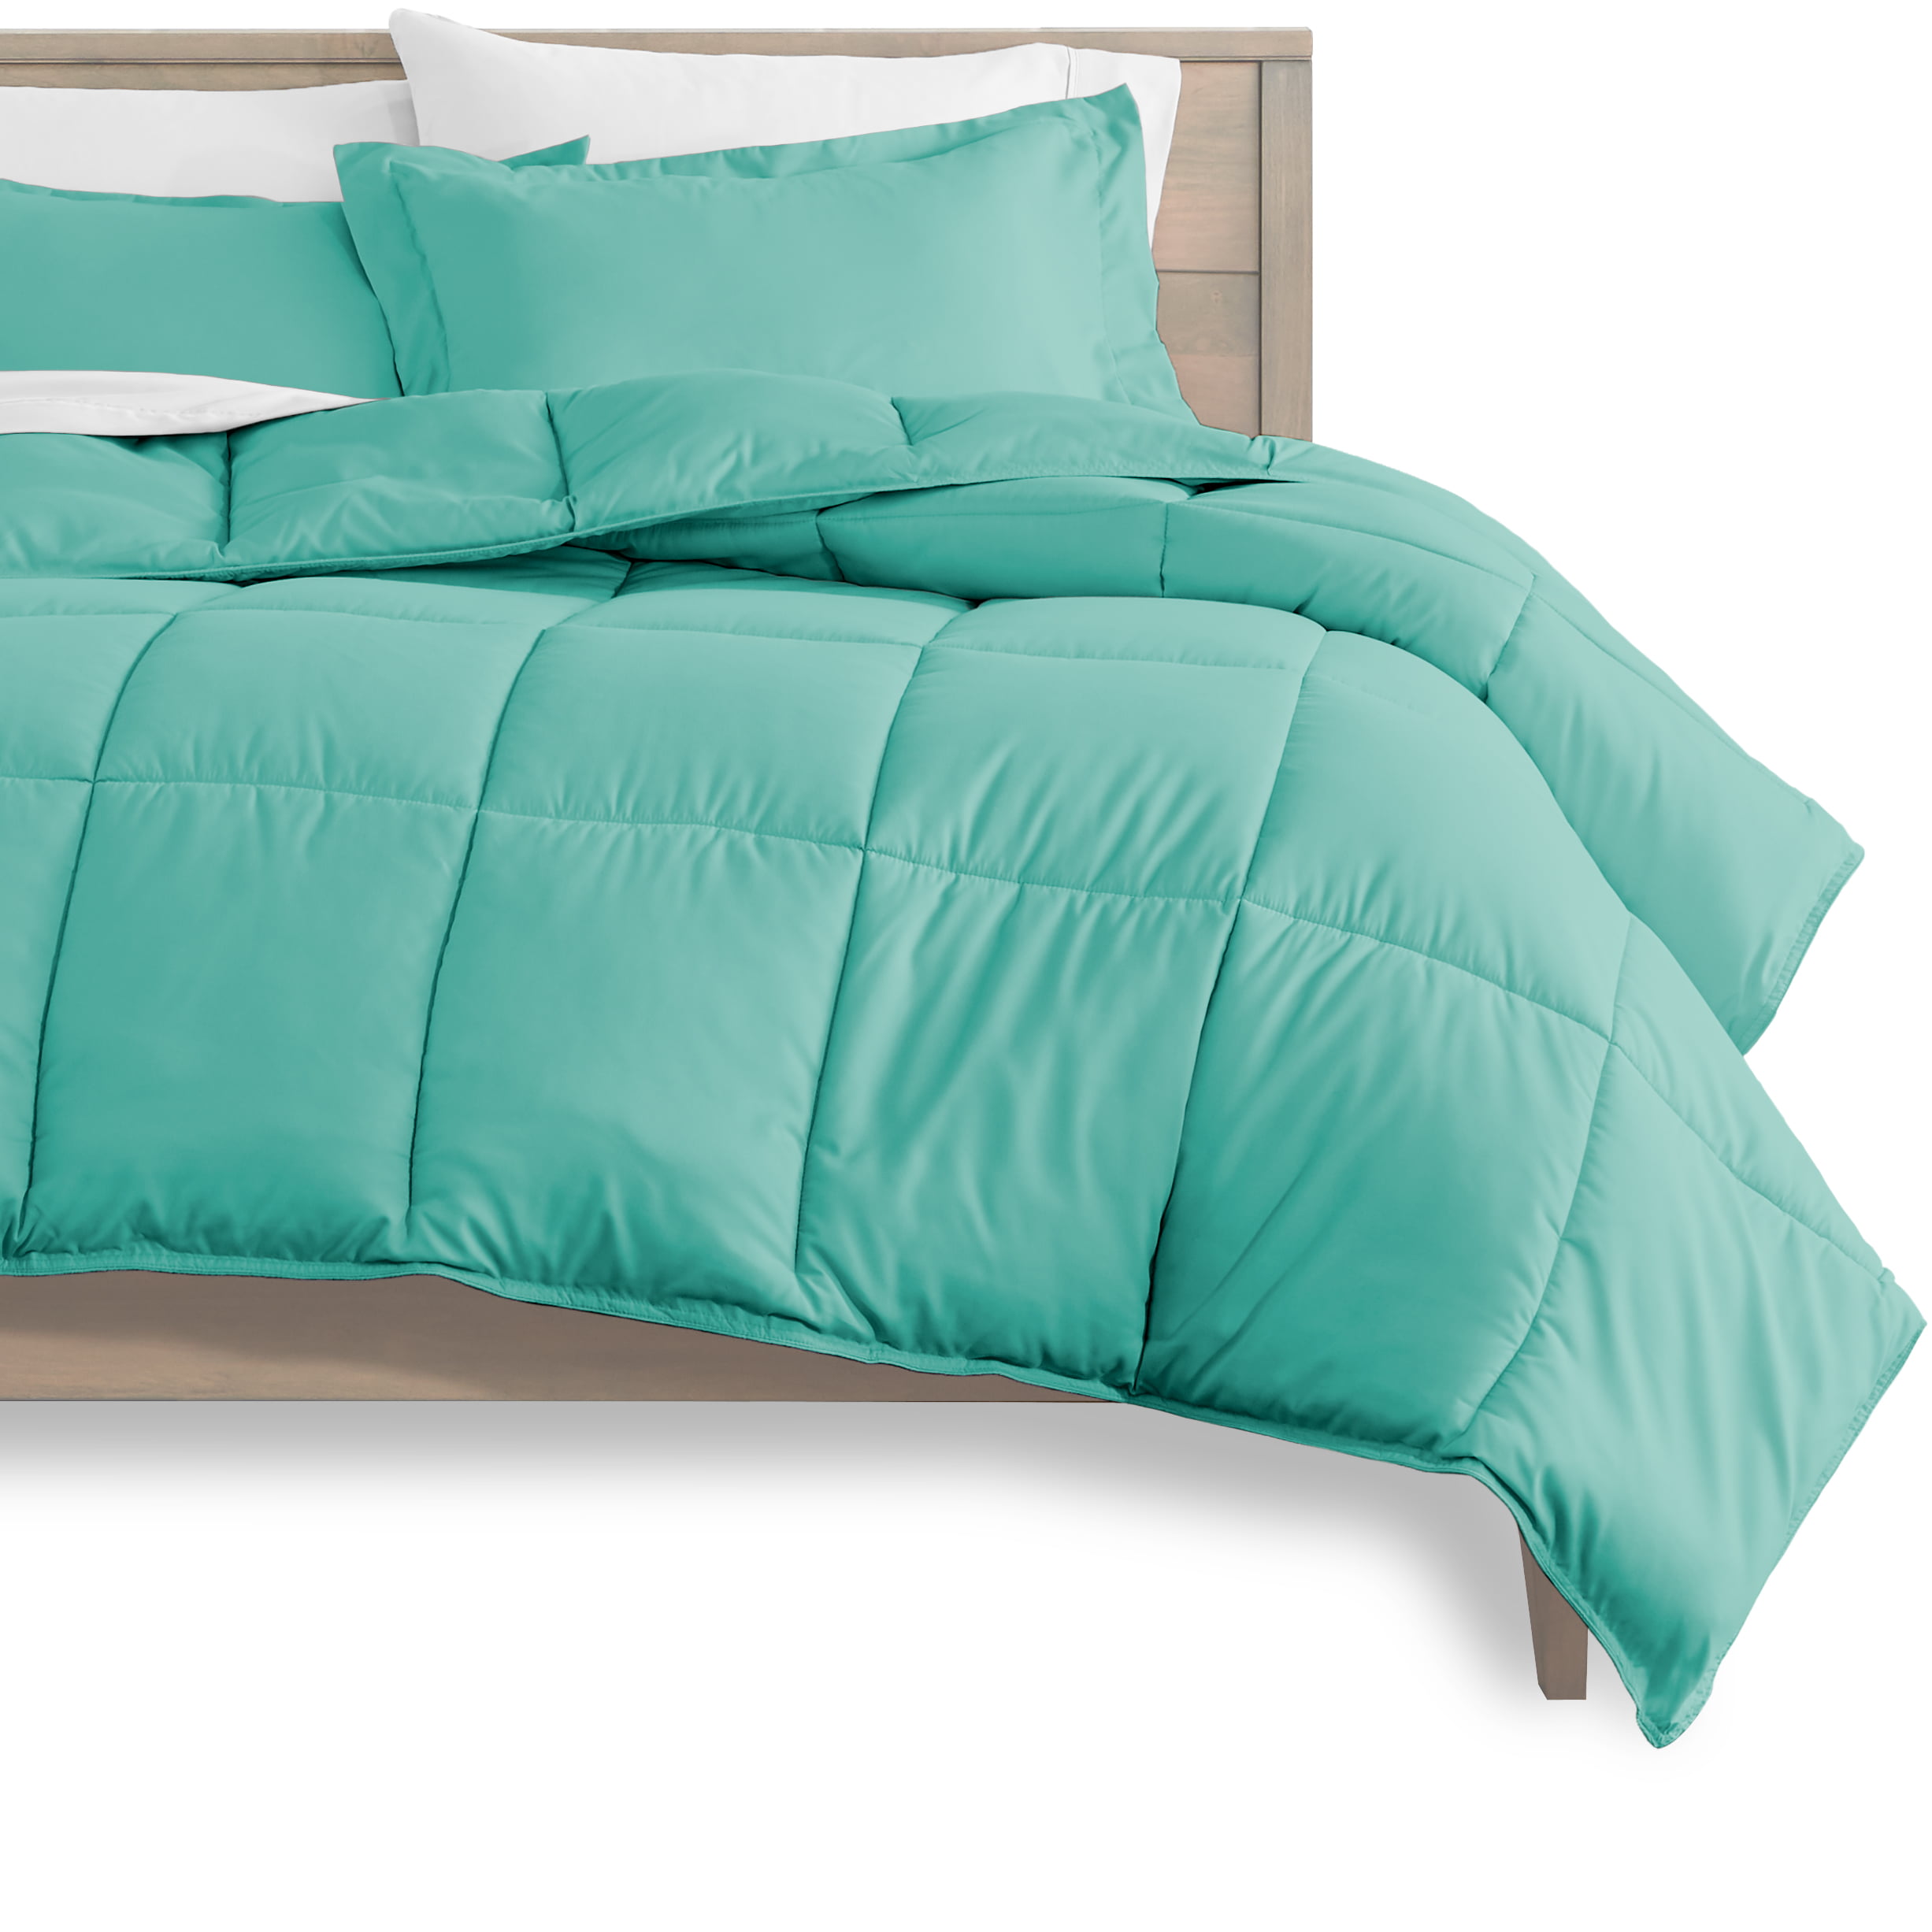 Cover Set Bedding Comforter Size Sheet  Twin/Twin XL 6 Piece Set Shams Us Super 